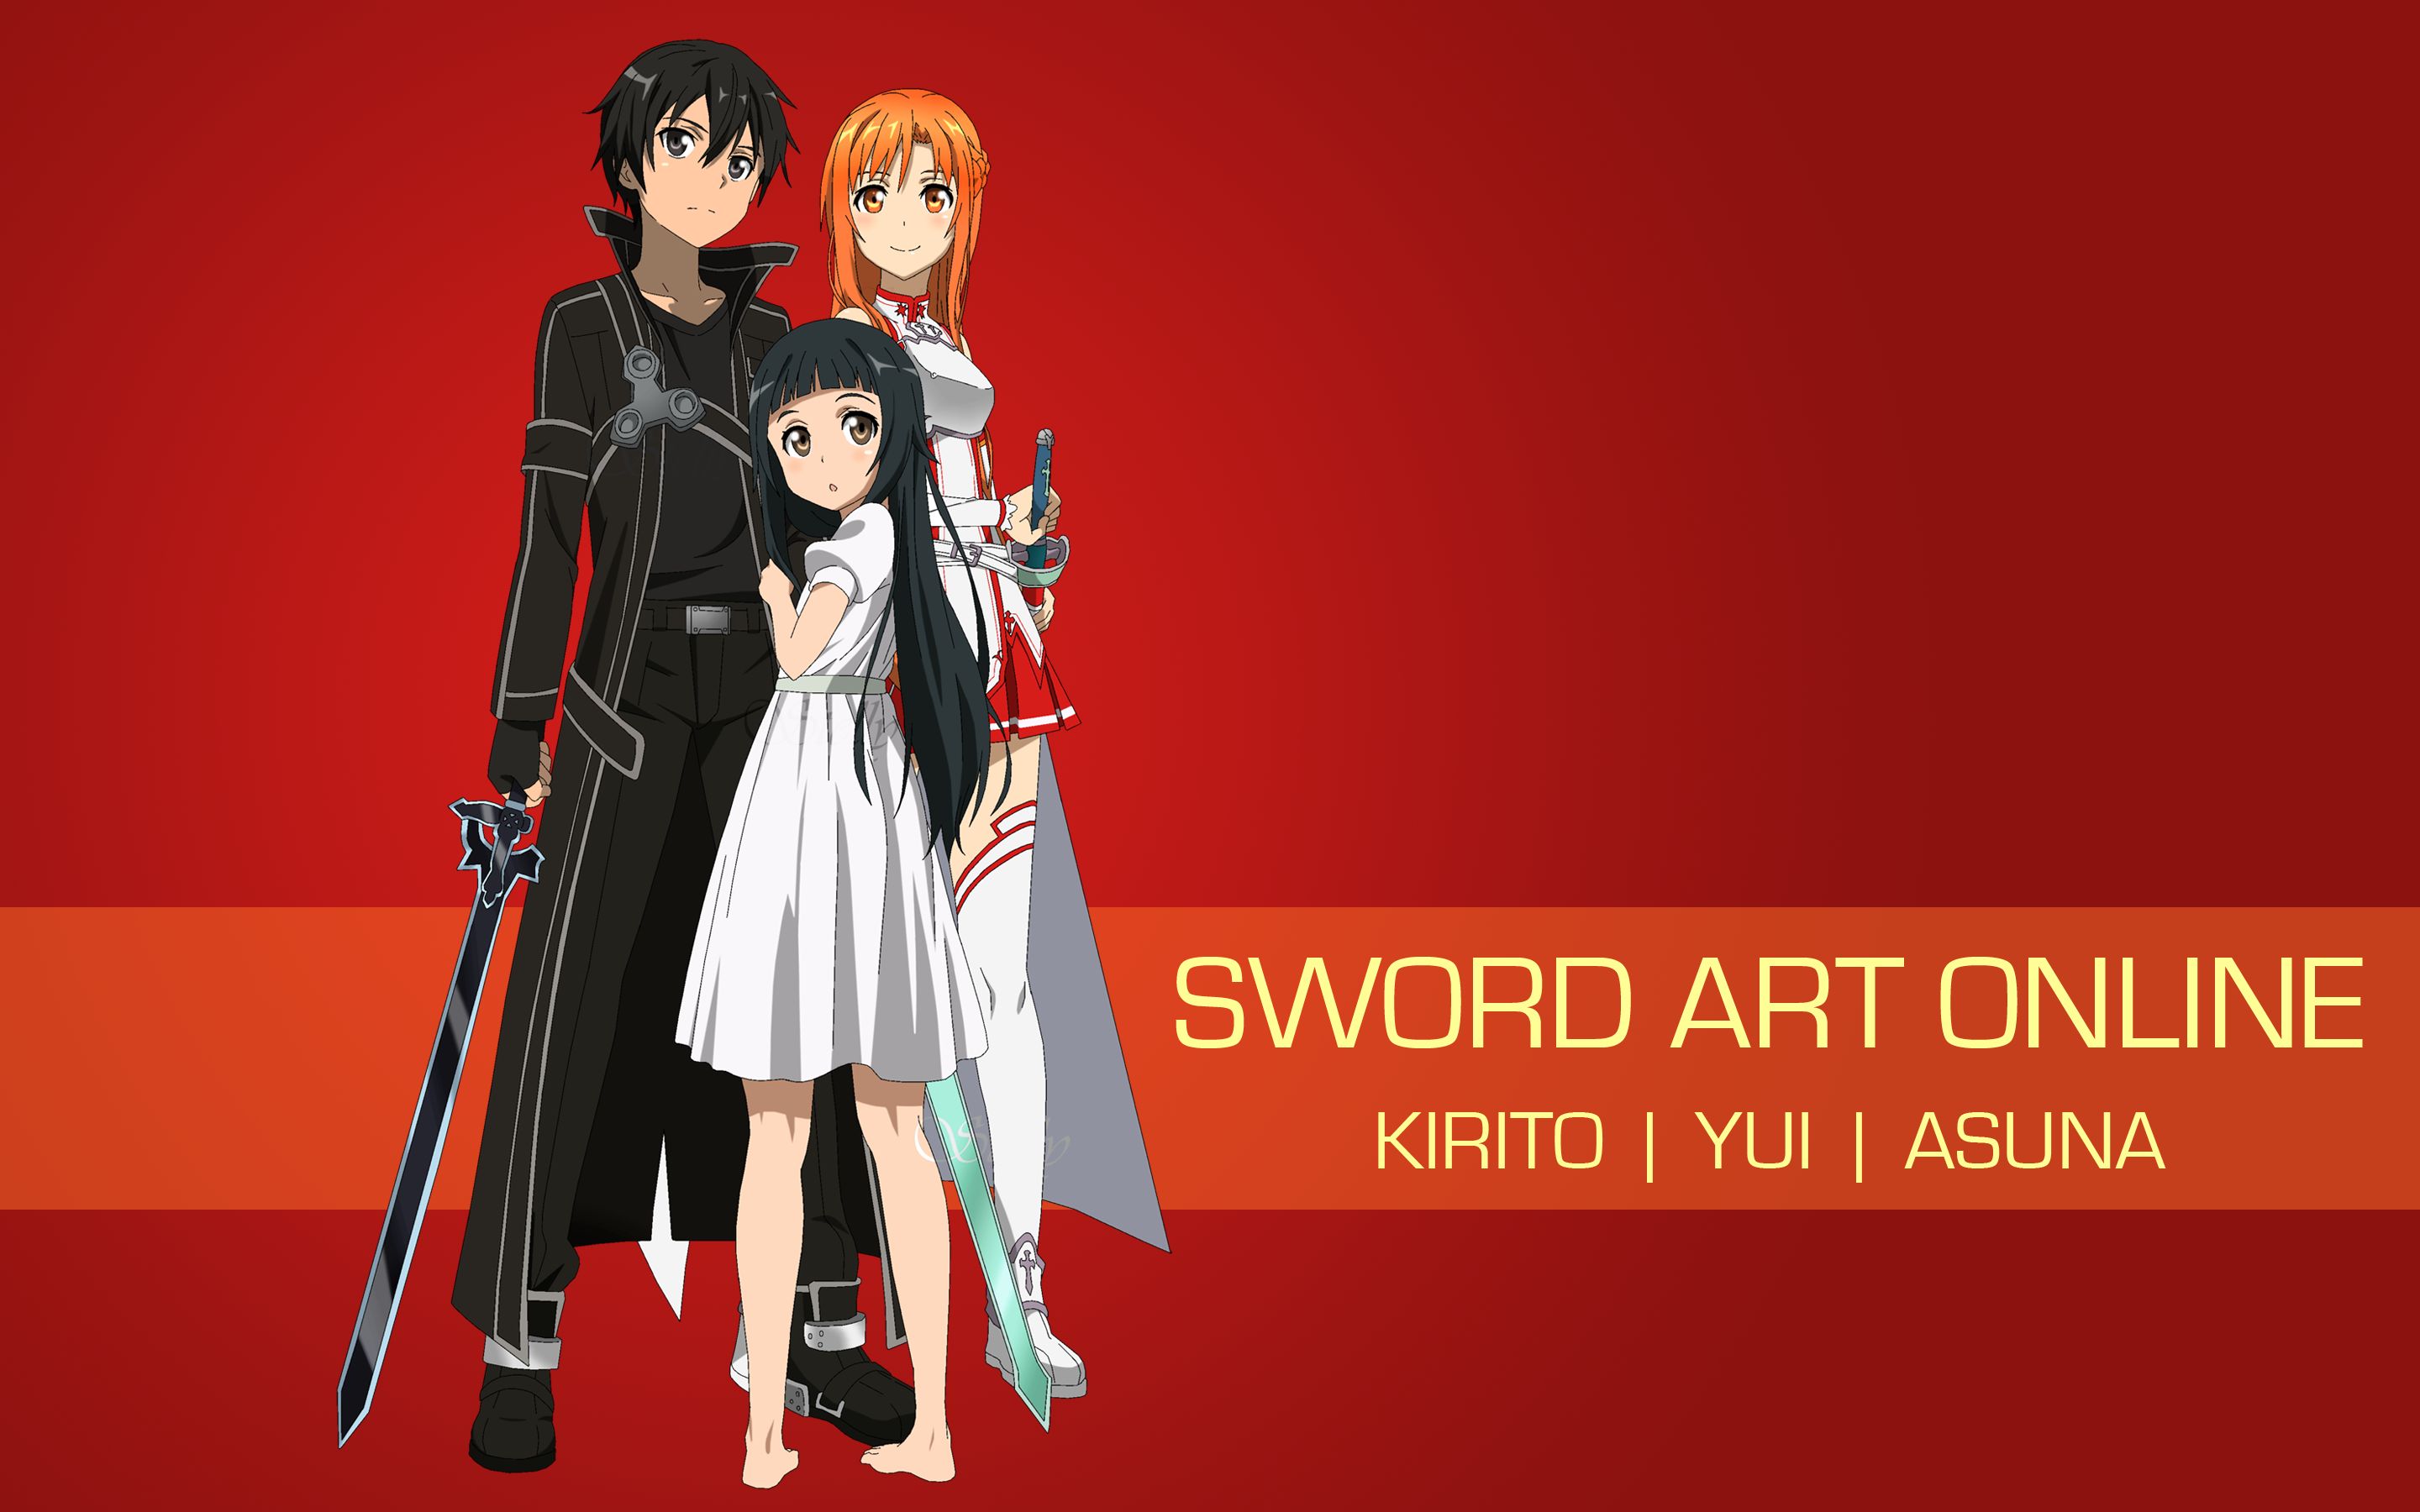 Descarga gratis la imagen Sword Art Online, Animado, Asuna Yuuki, Kirito (Arte De Espada En Línea), Kazuto Kirigaya, Yui (Arte De Espada En Línea) en el escritorio de tu PC